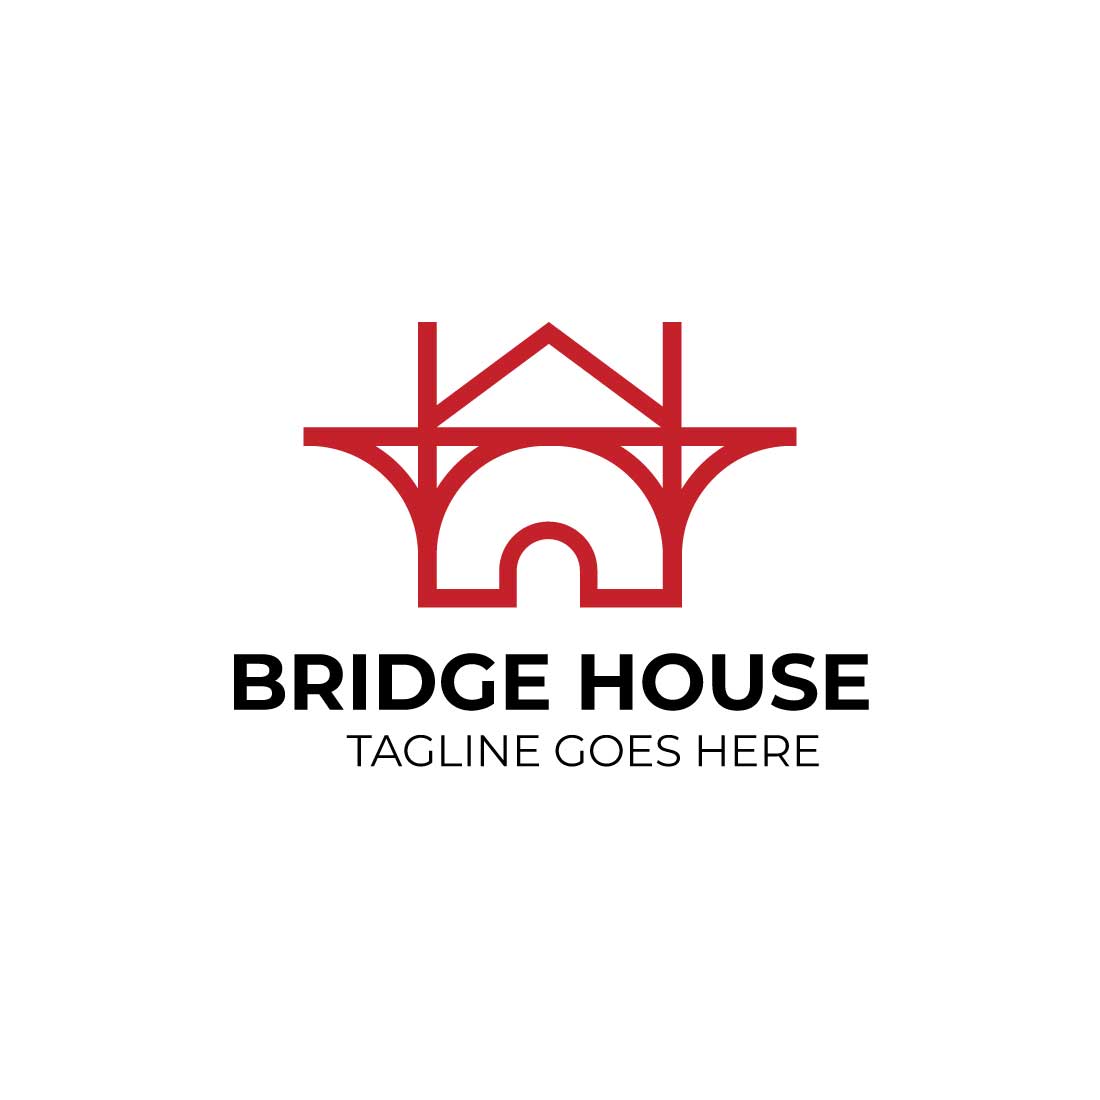 Professional Bridge House Logo design cover image.